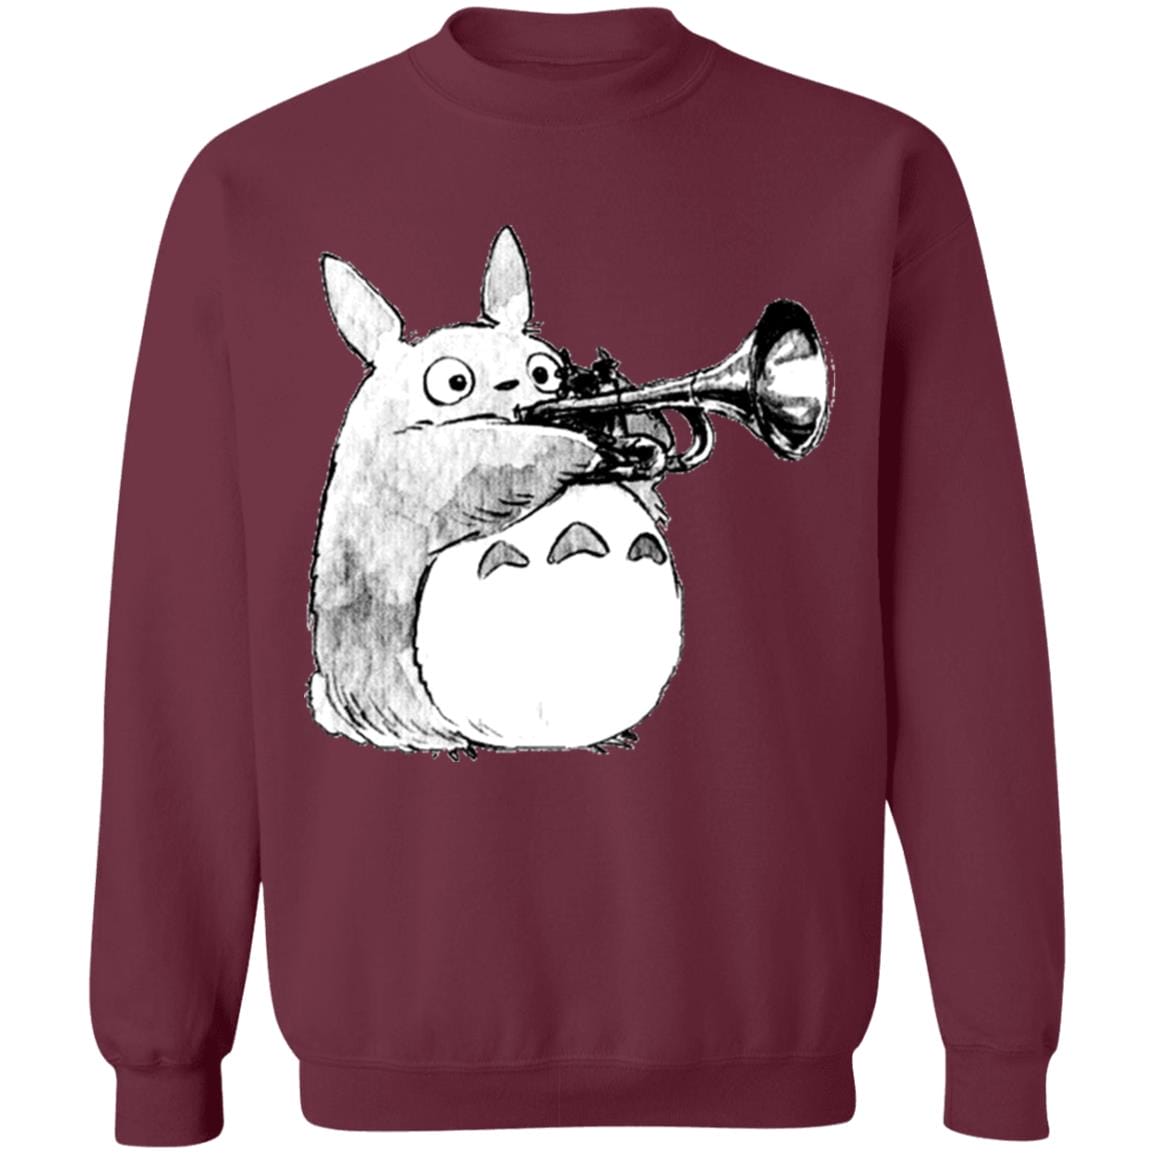 Totoro and the trumpet Sweatshirt